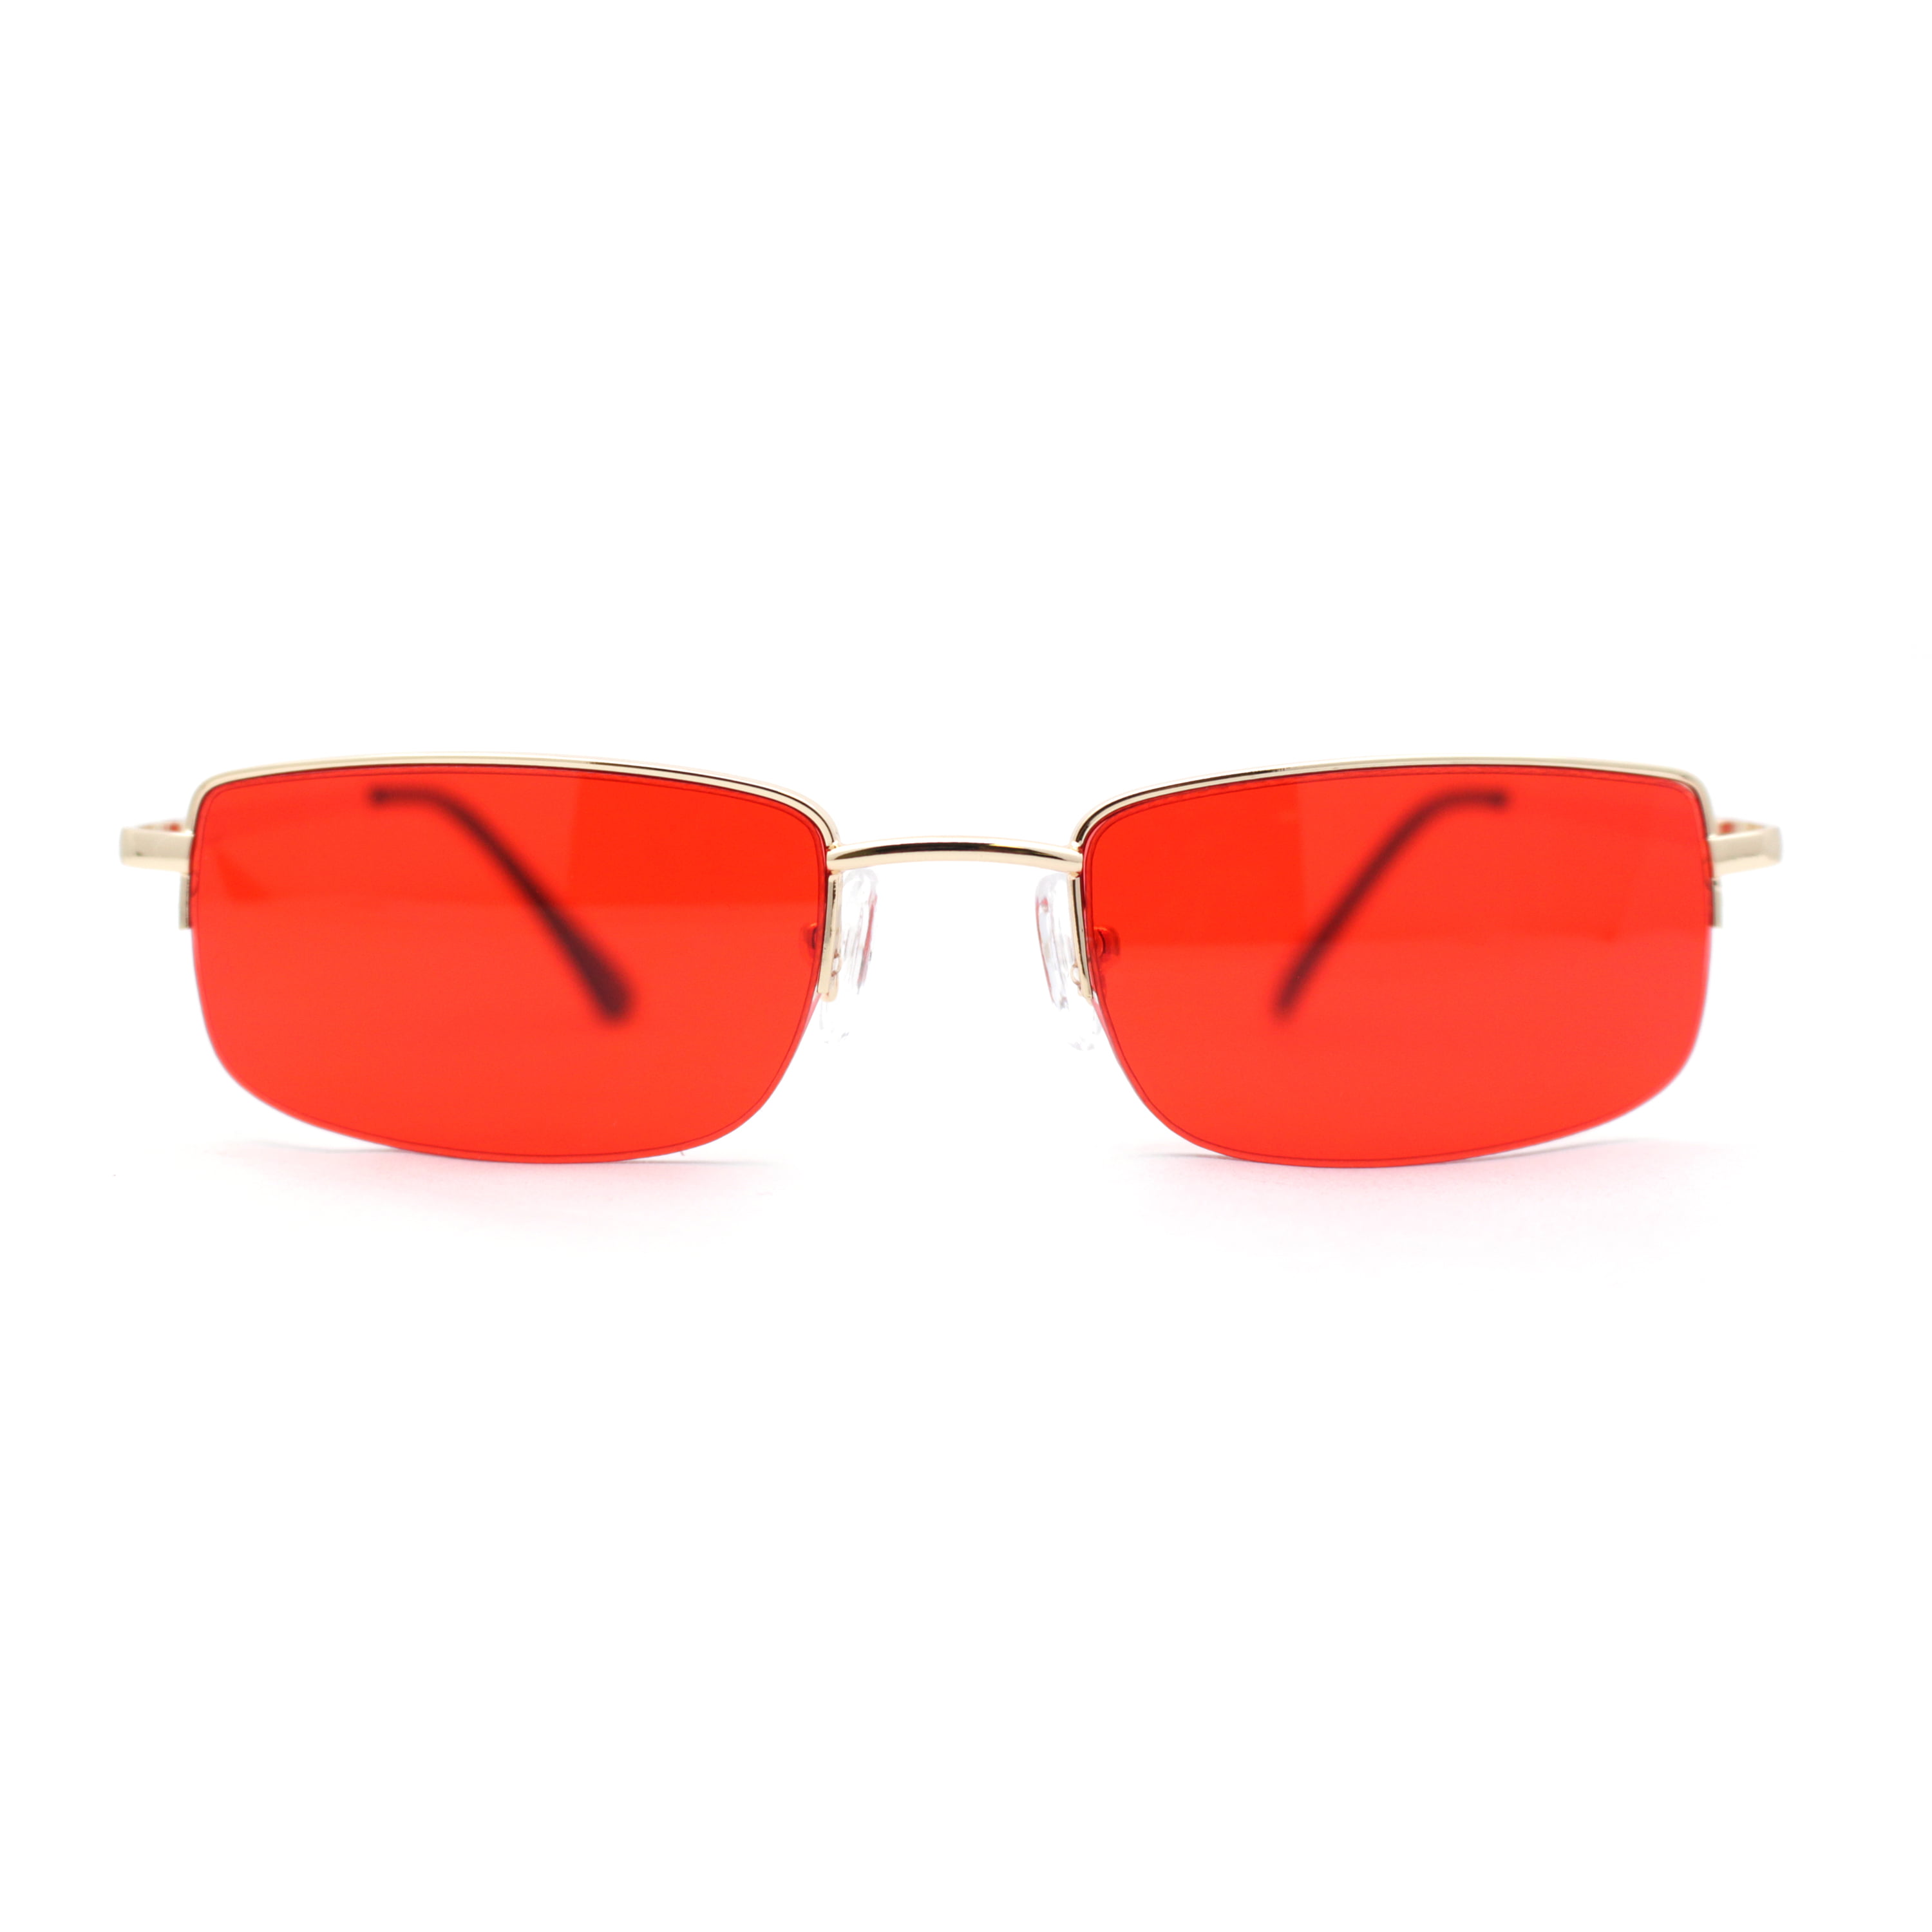 Share 219+ 90s sunglasses mens latest